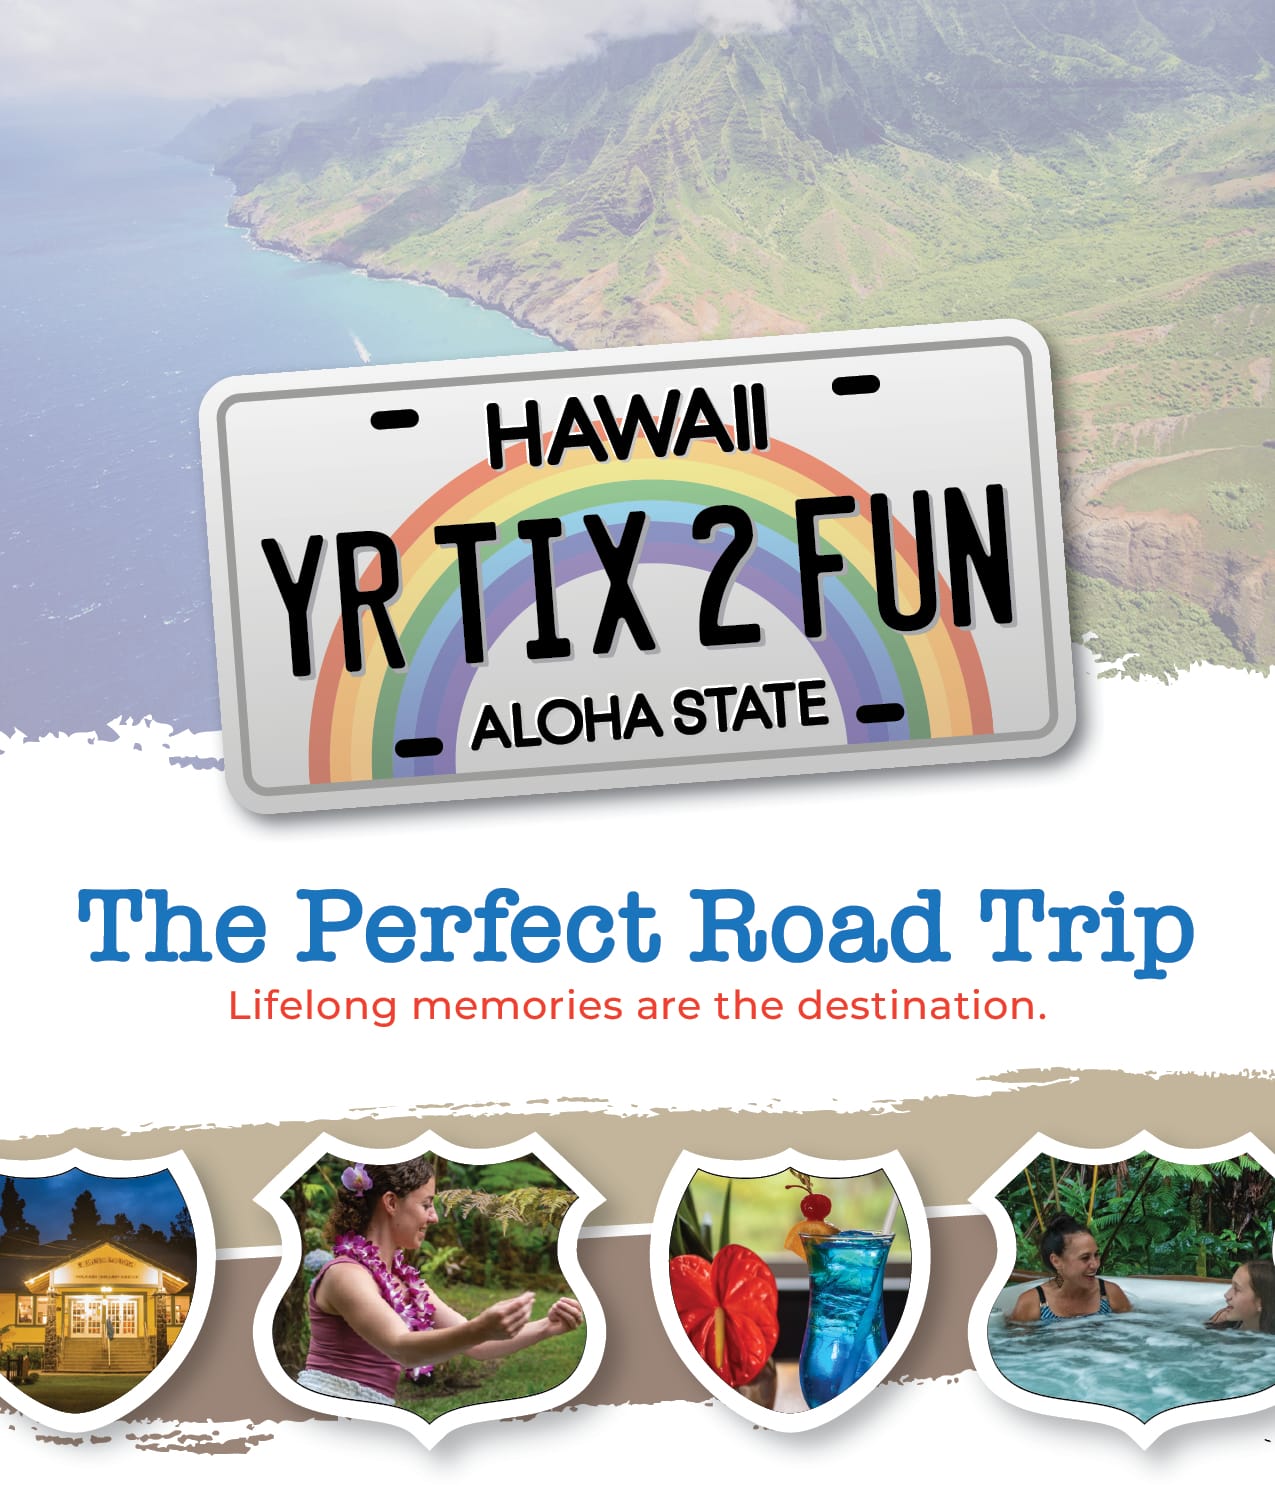 The Perfect Road Trip – The Big Island